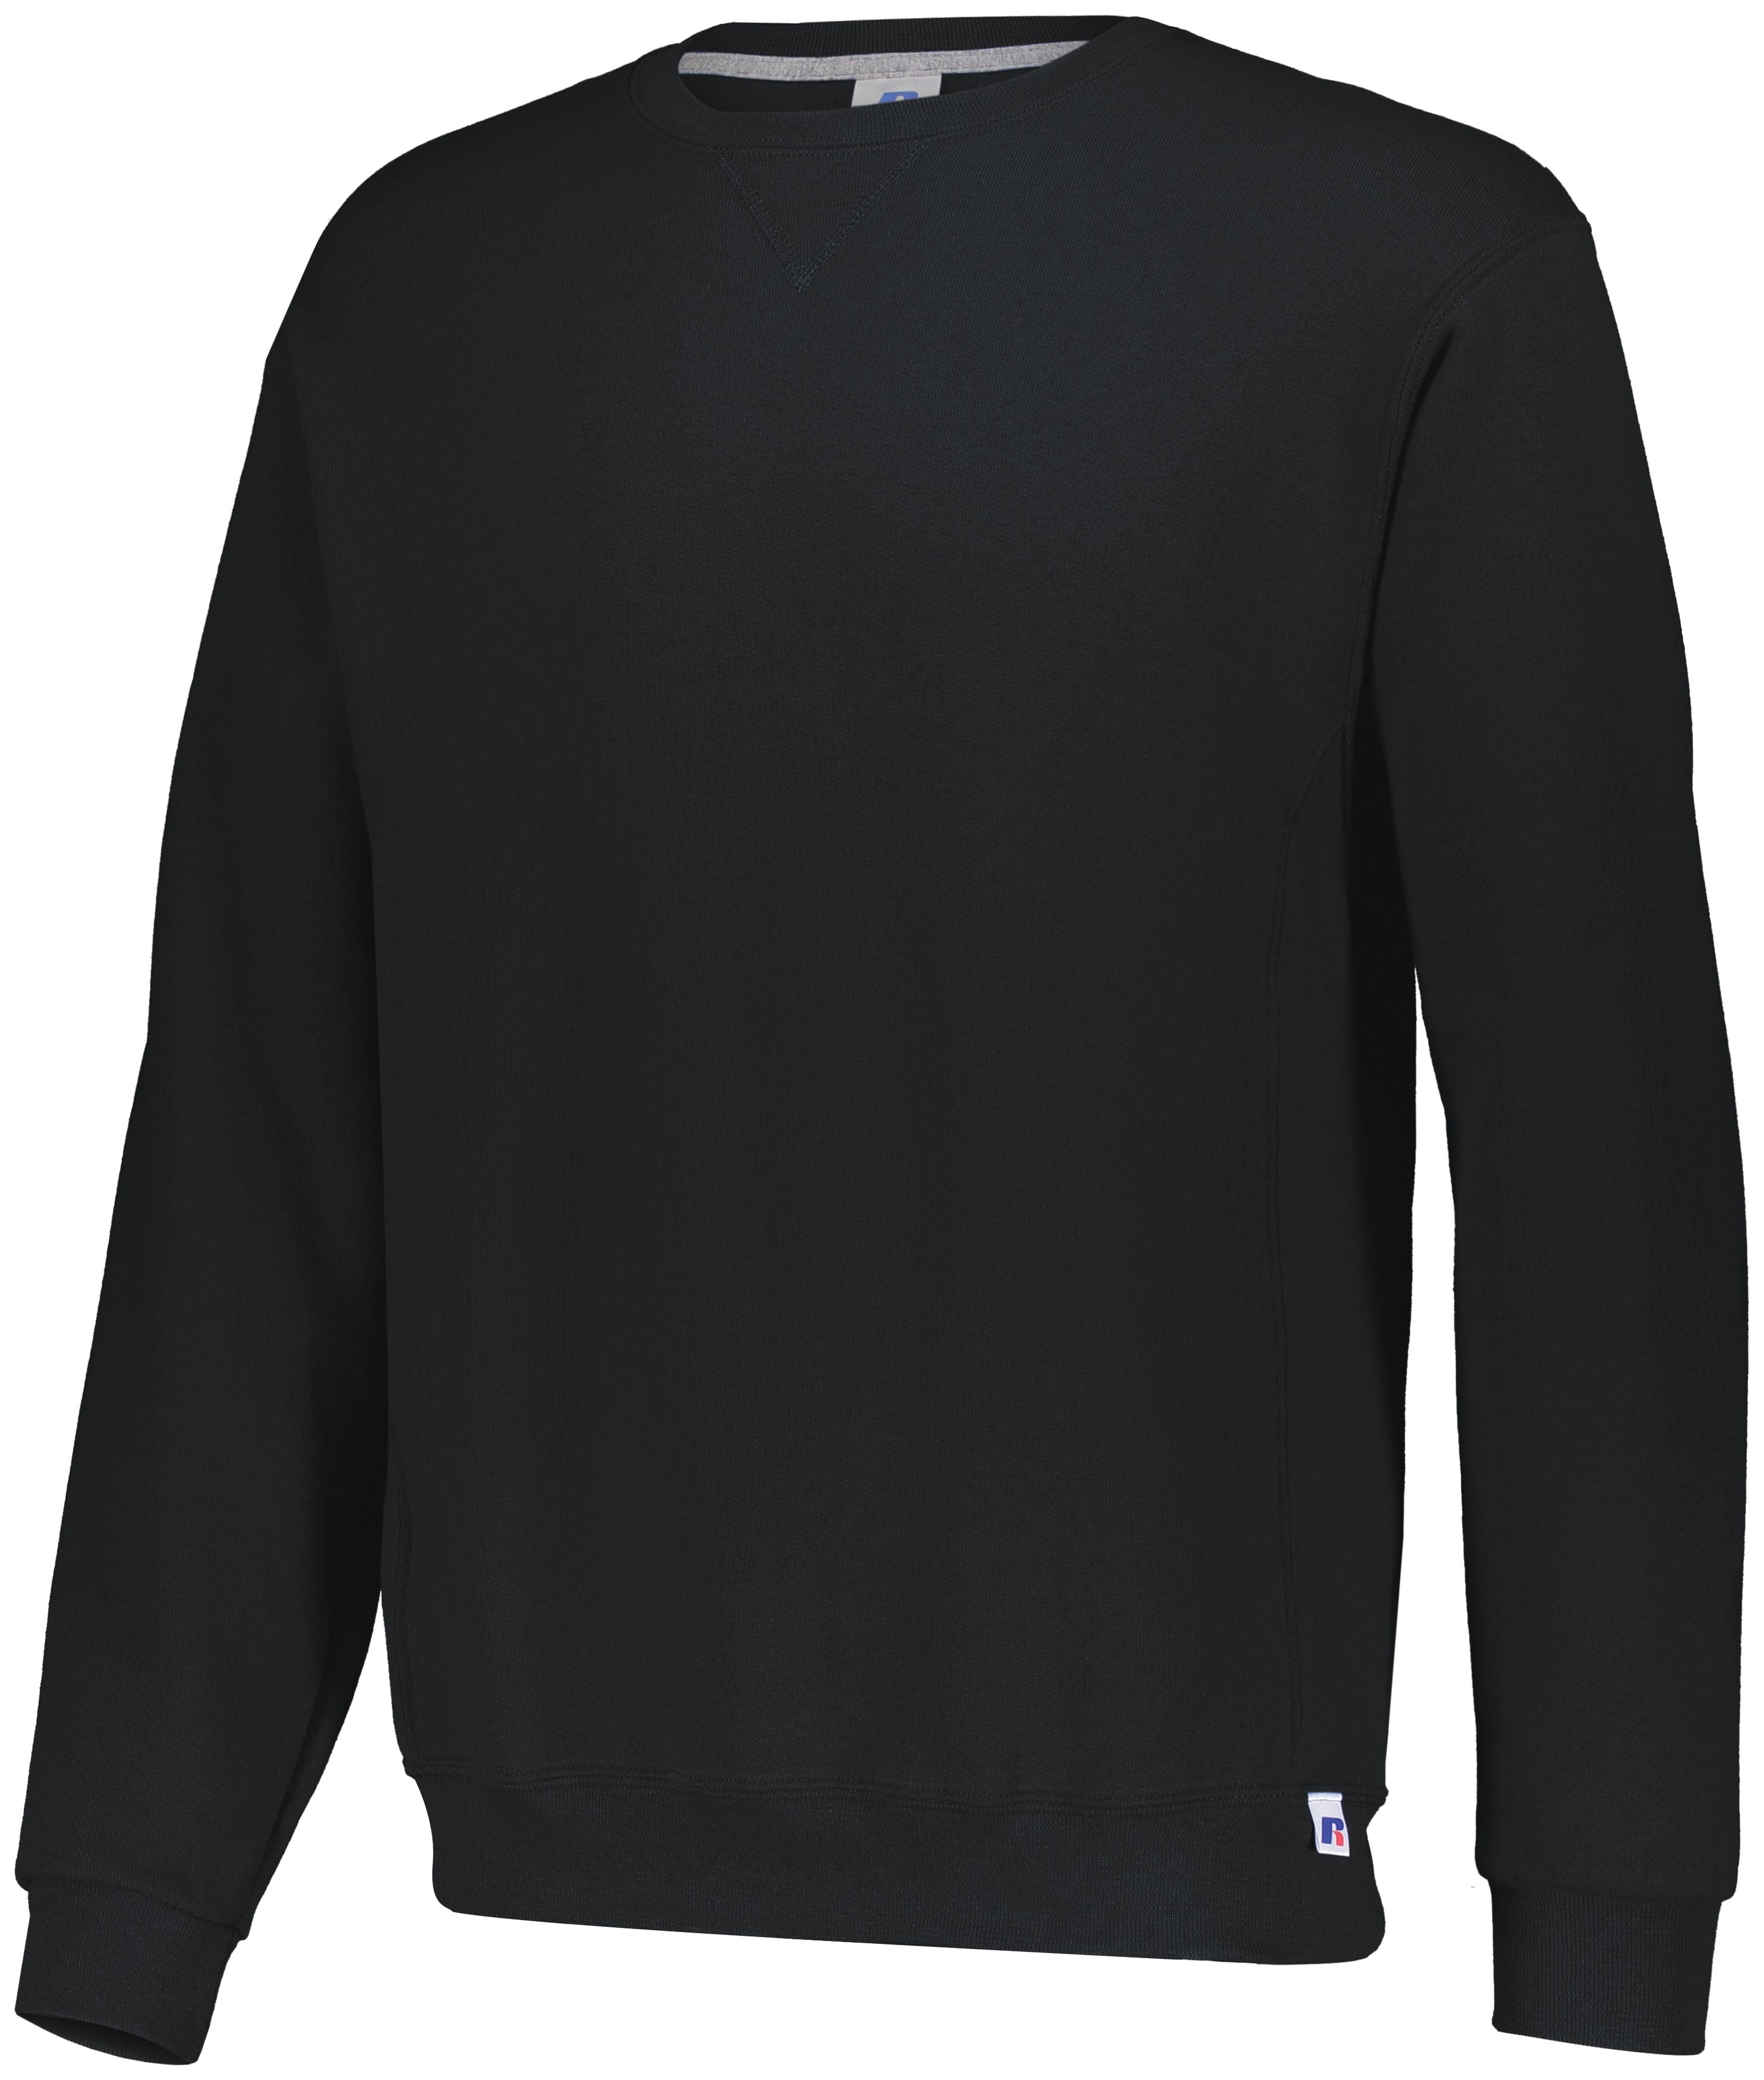 Russell Athletic Dri-Power Fleece Crew Sweatshirt